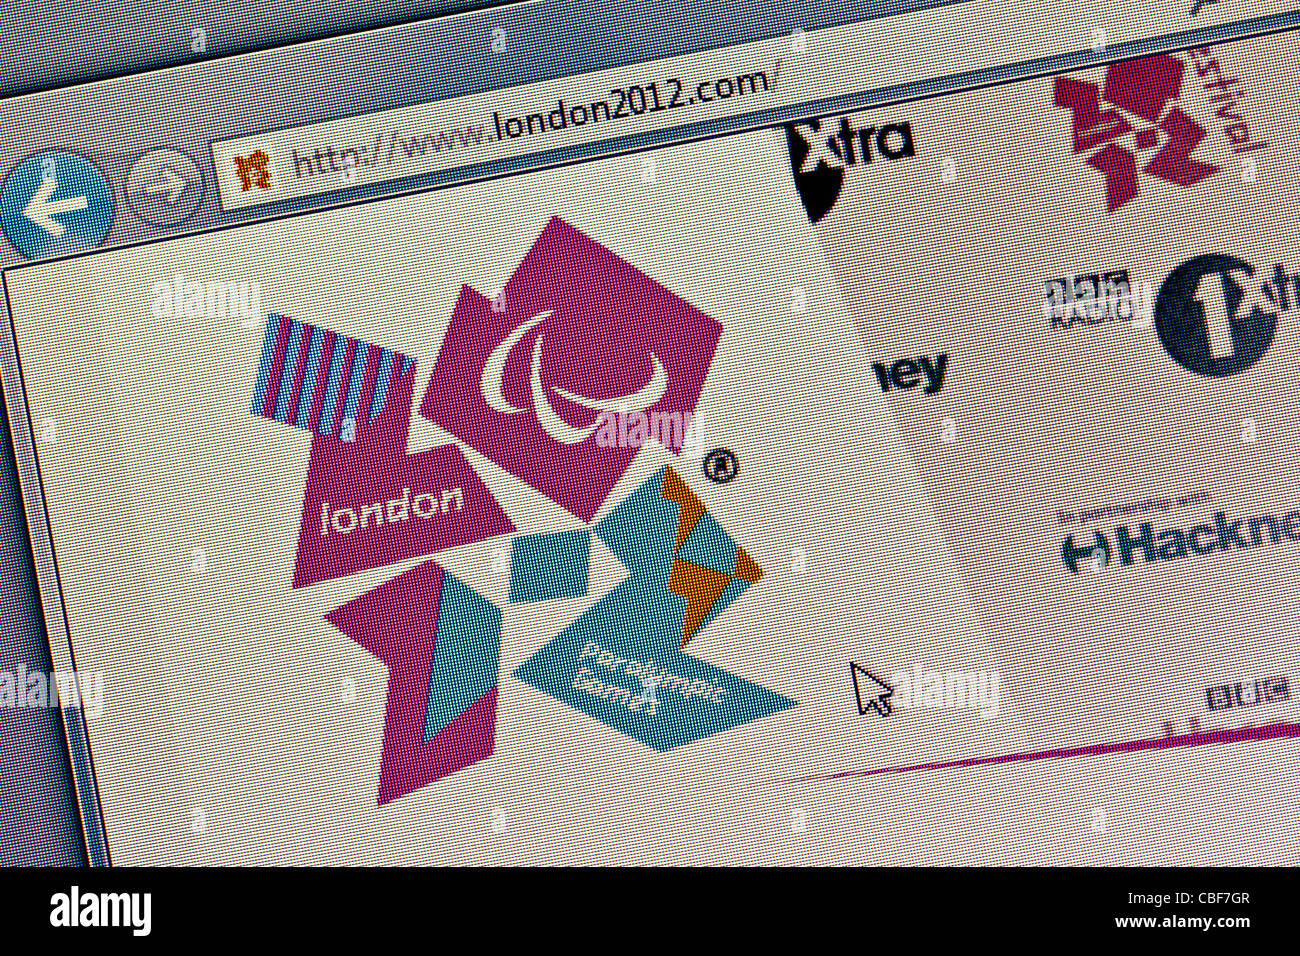 London 2012 Paralympics logo and website close up Stock Photo